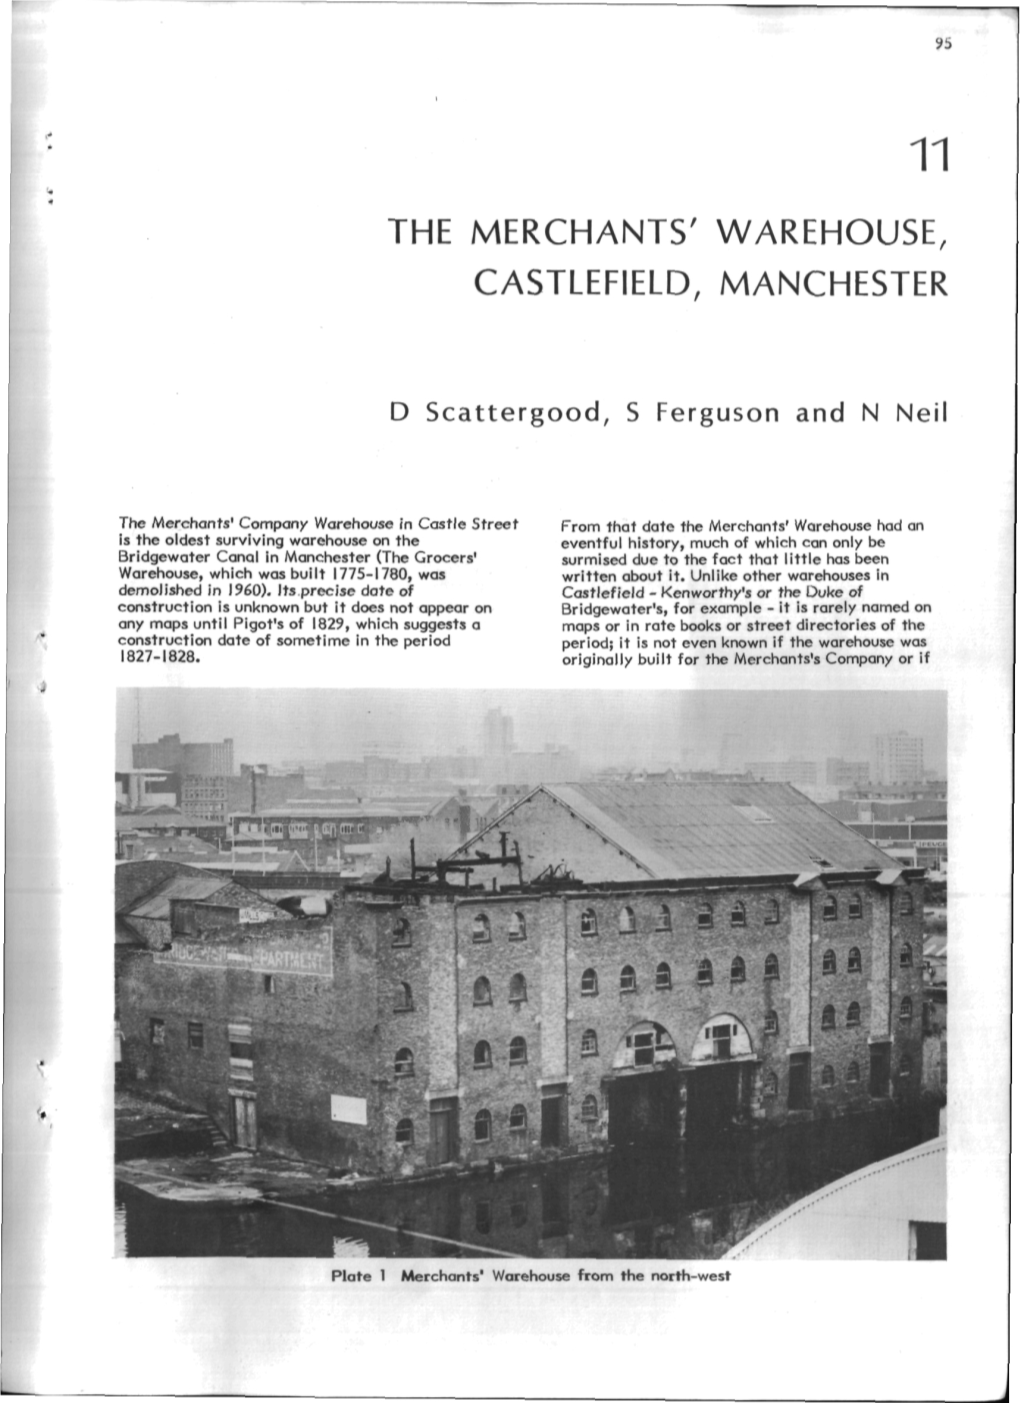 The Merchants' Warehouse, Castlefield, Manchester